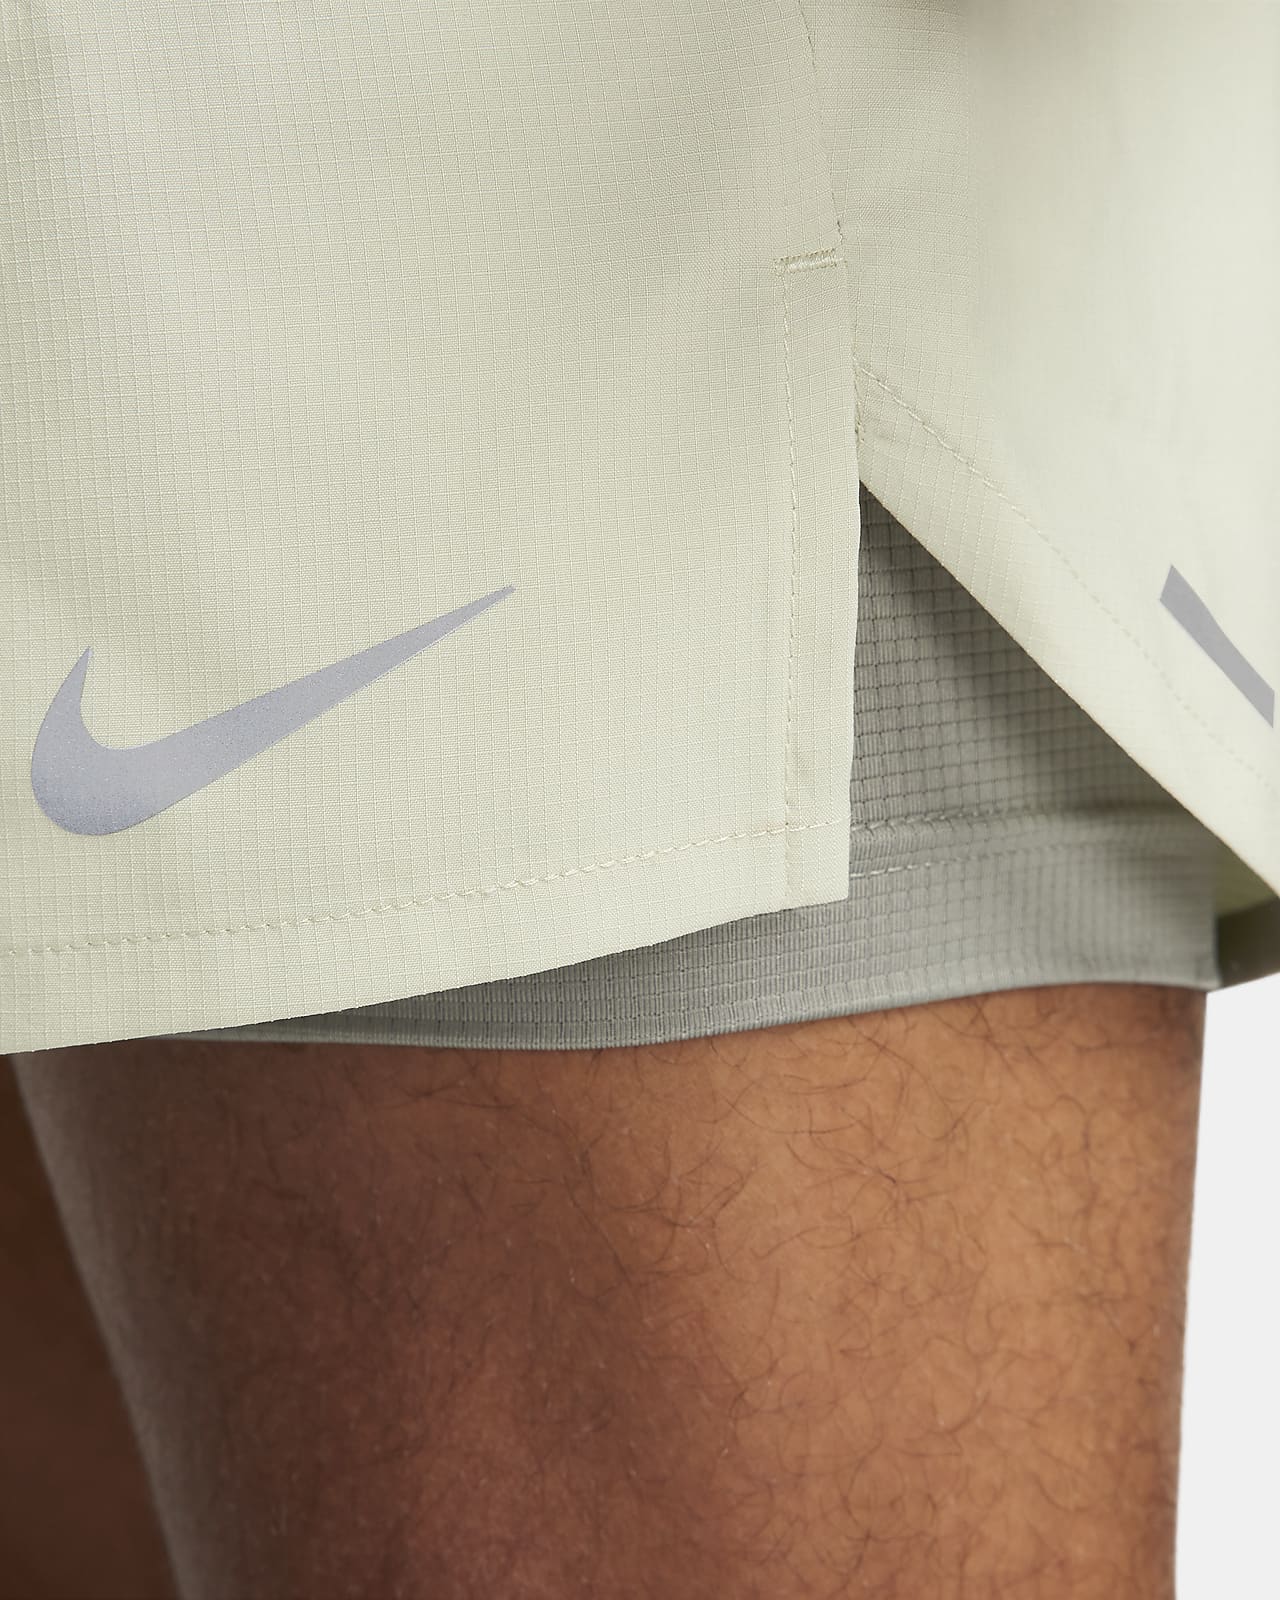 Nike Men's Dri-FIT Stride Hybrid Running Shorts 7 in